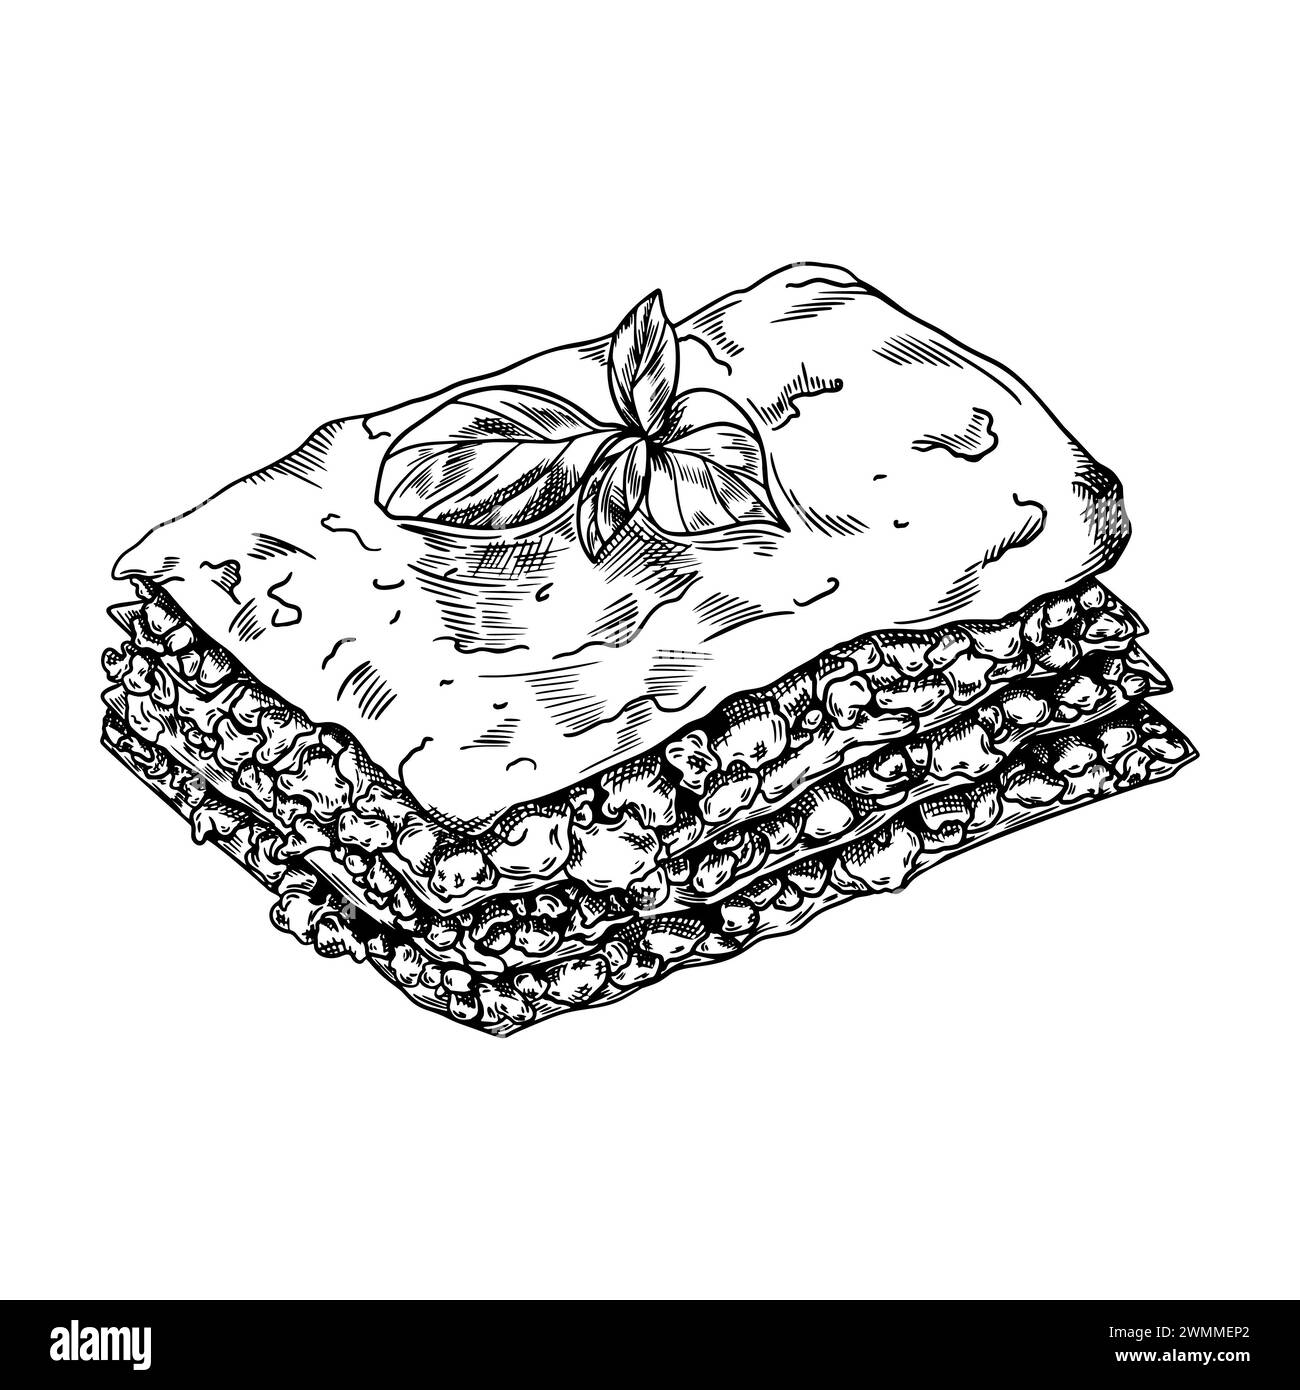 Lasagna Hand Drawn Sketch Food Illustration White Background Stock Photo